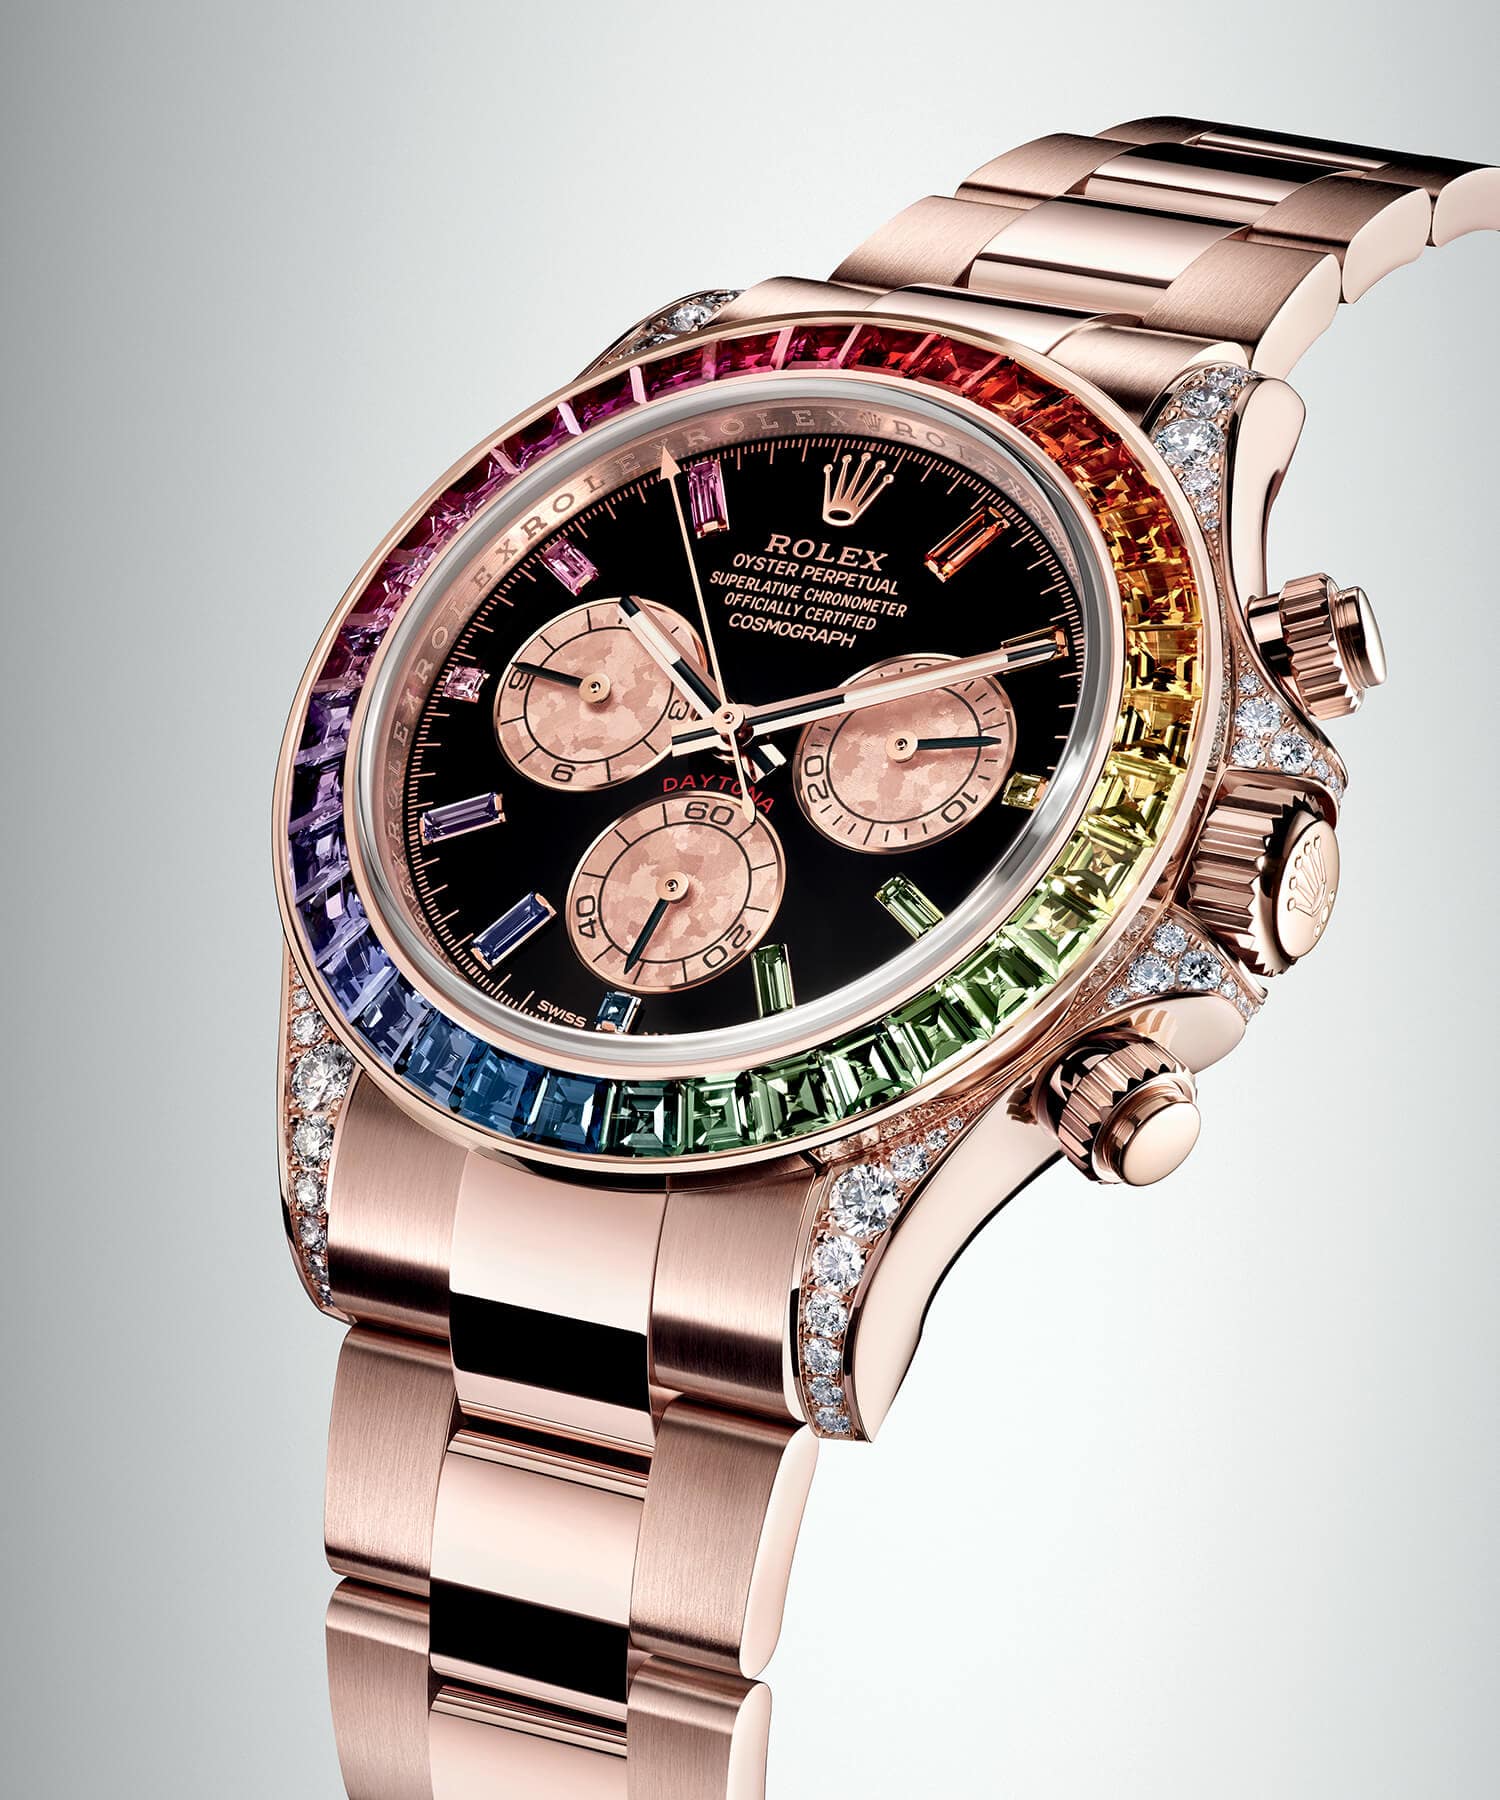 New Rolex Cosmograph Daytona watch